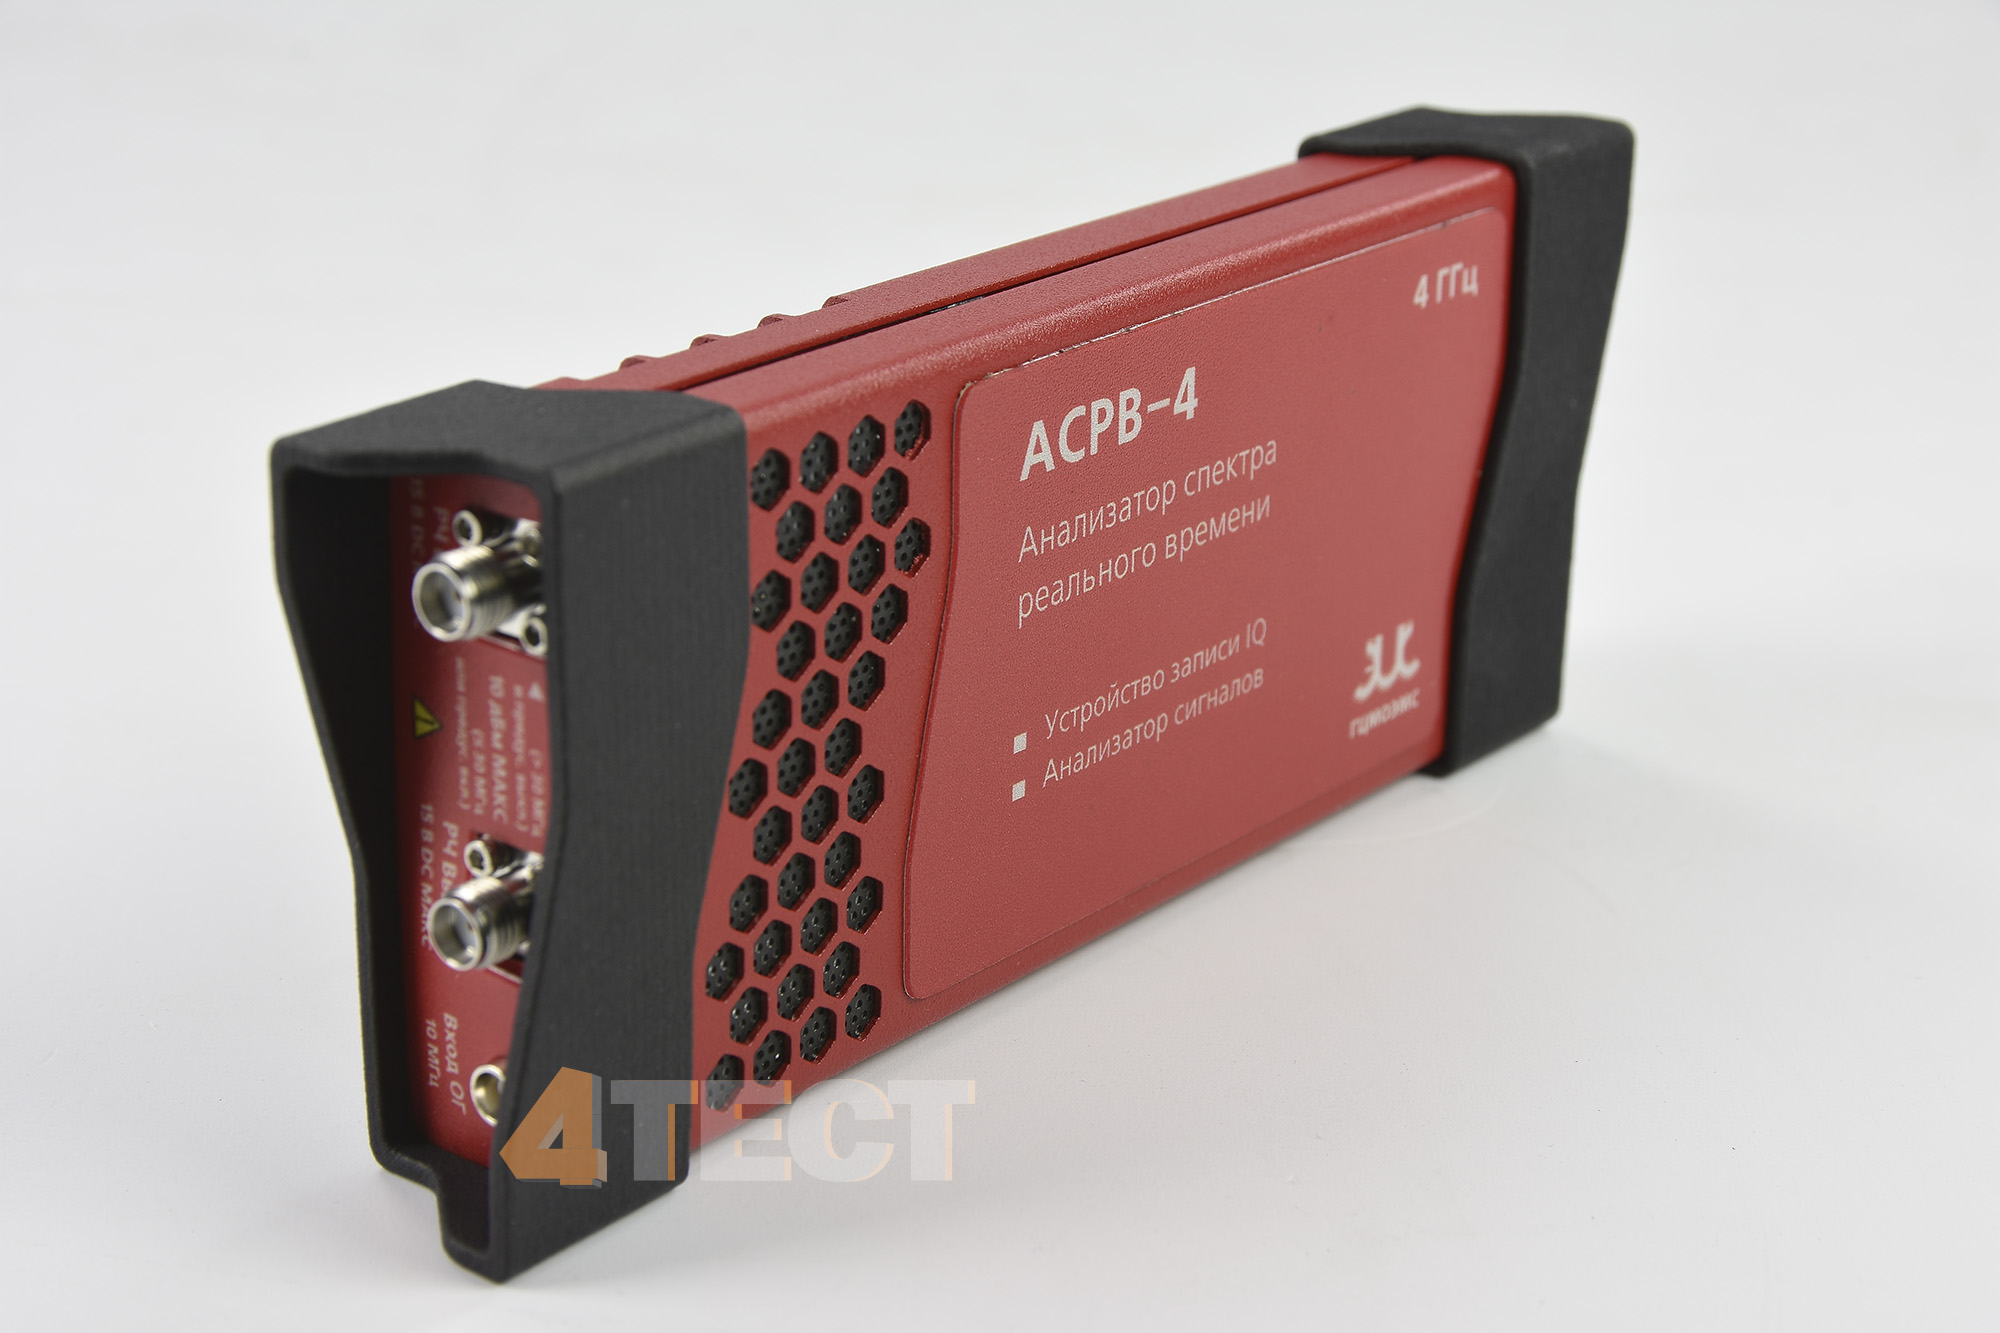 Анализатор спектра реального времени
ГЦМО ЭМС АСРВ-4
с диапазоном от 9 кГц до 4,5 ГГц/6,3 ГГц